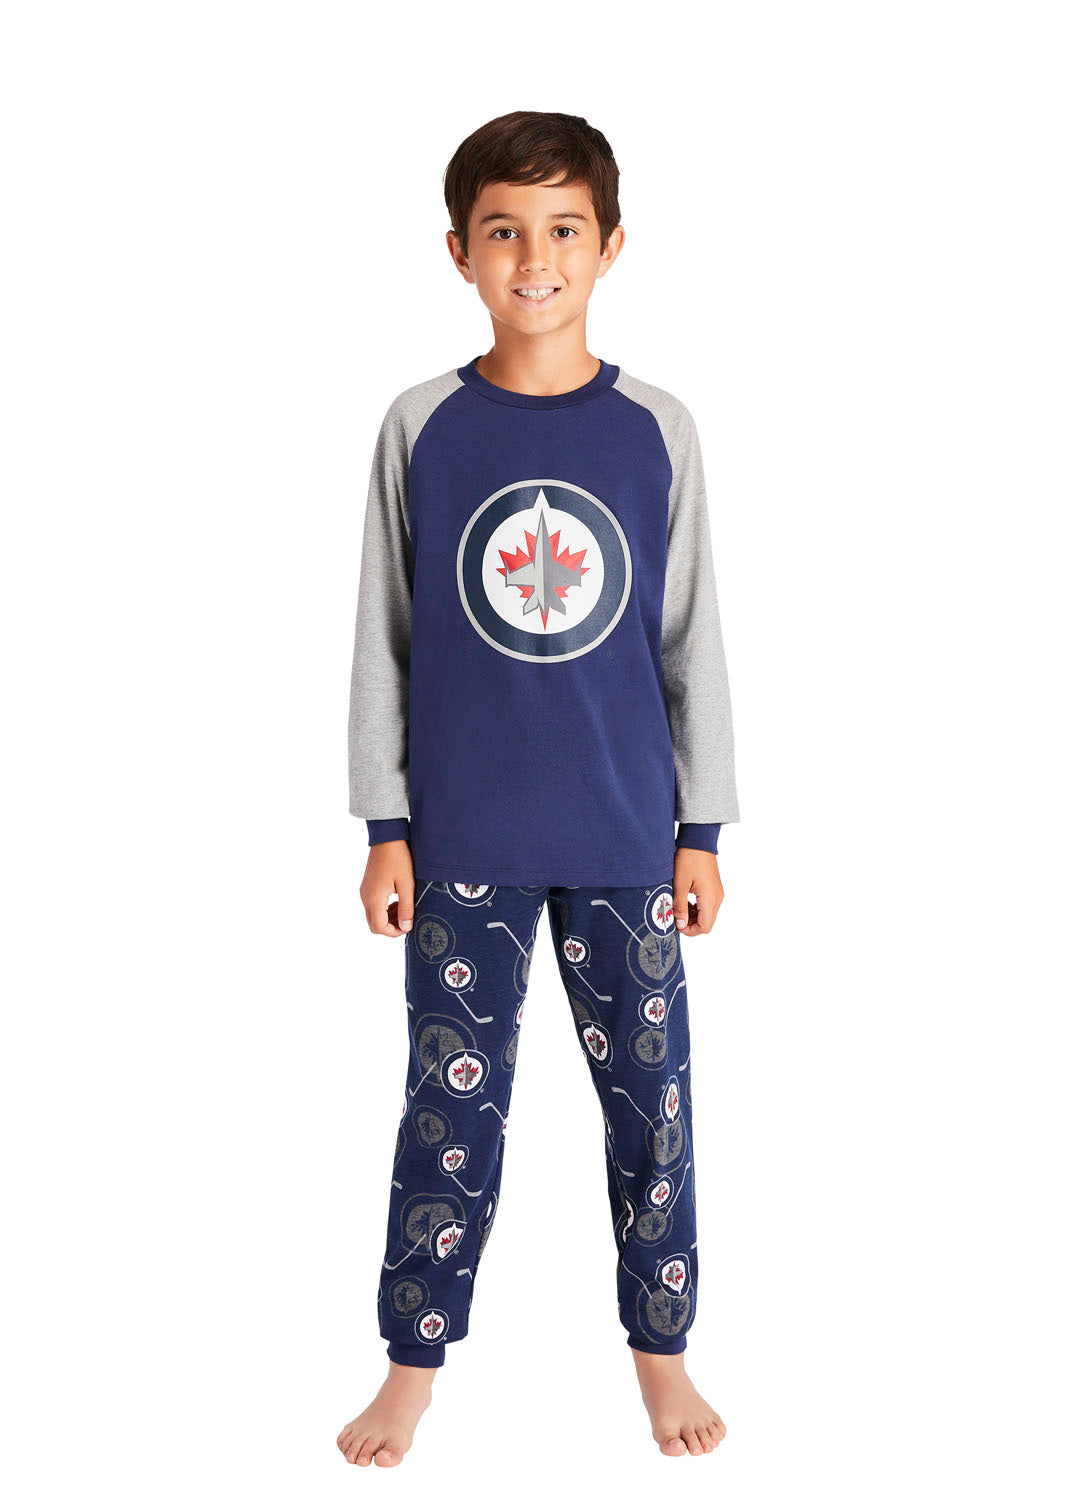 Boys Winnipeg Jets Pajama Set